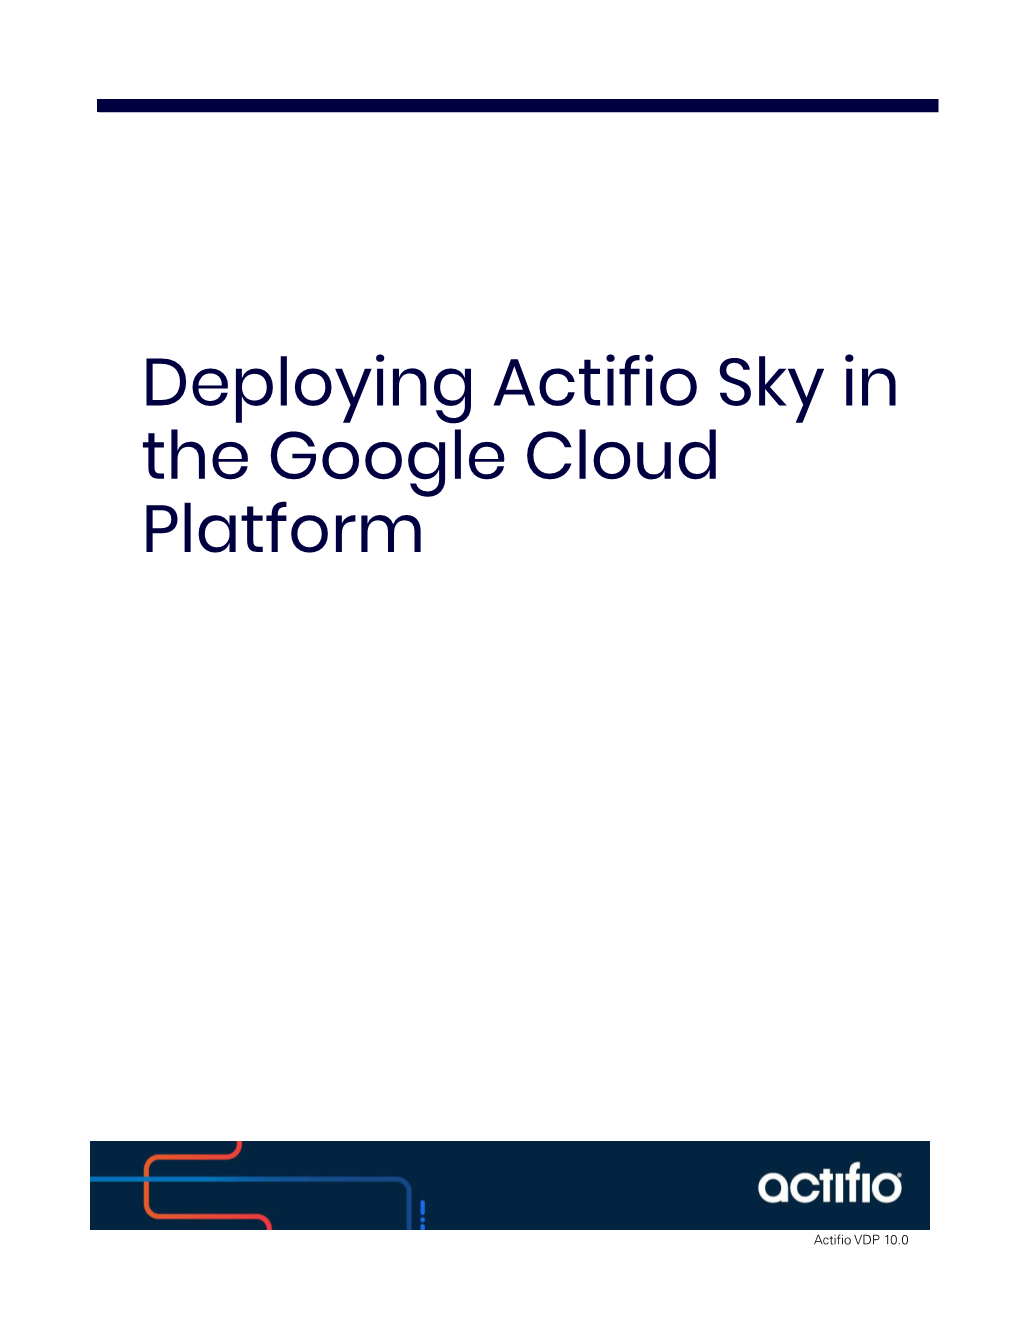 Deploying Actifio Sky in the Google Cloud Platform